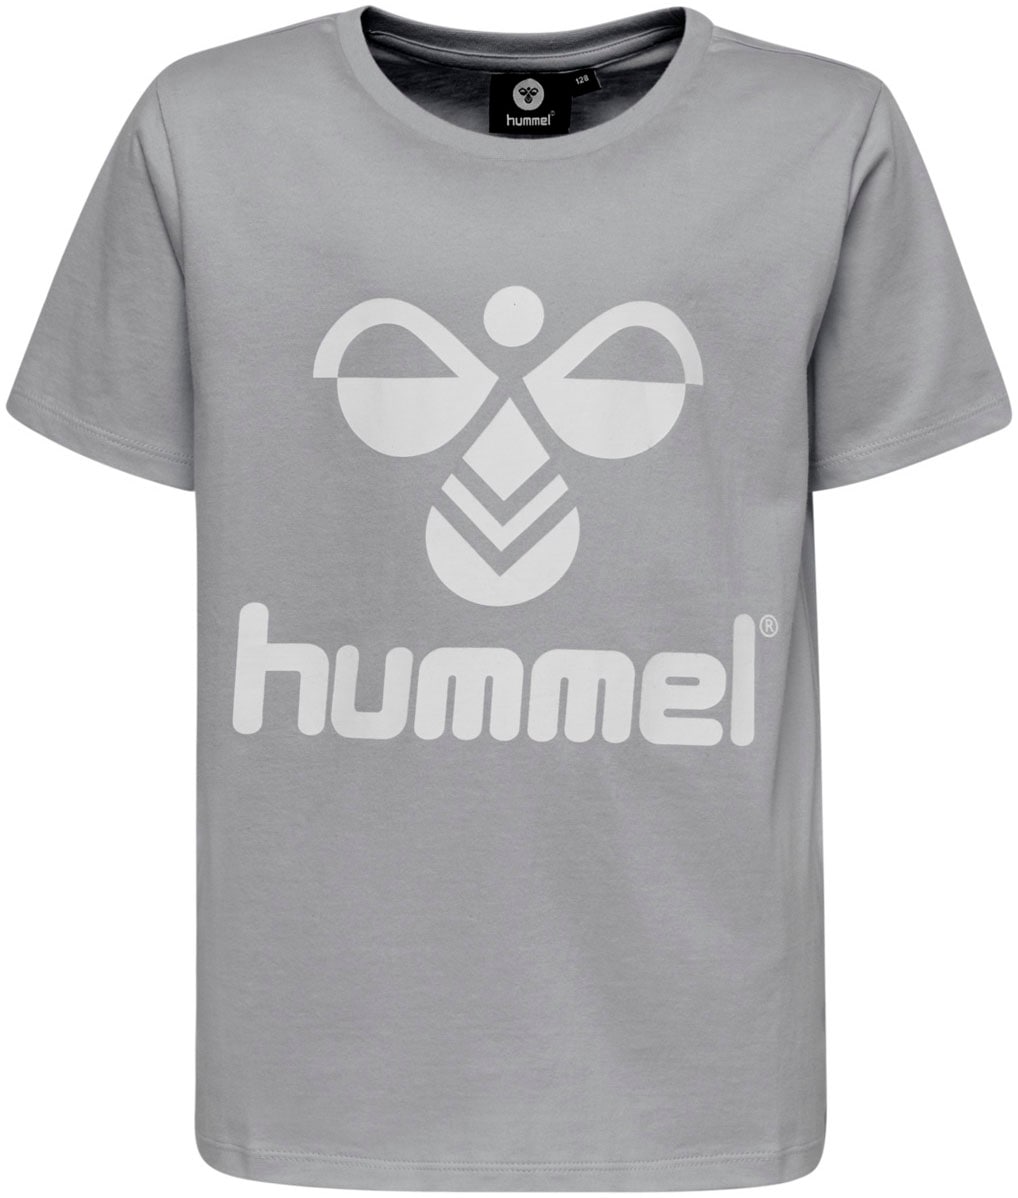 hummel T-Shirt für Kinder«, - T-SHIRT Trouver »HMLTRES tlg.) Sleeve sur Short (1